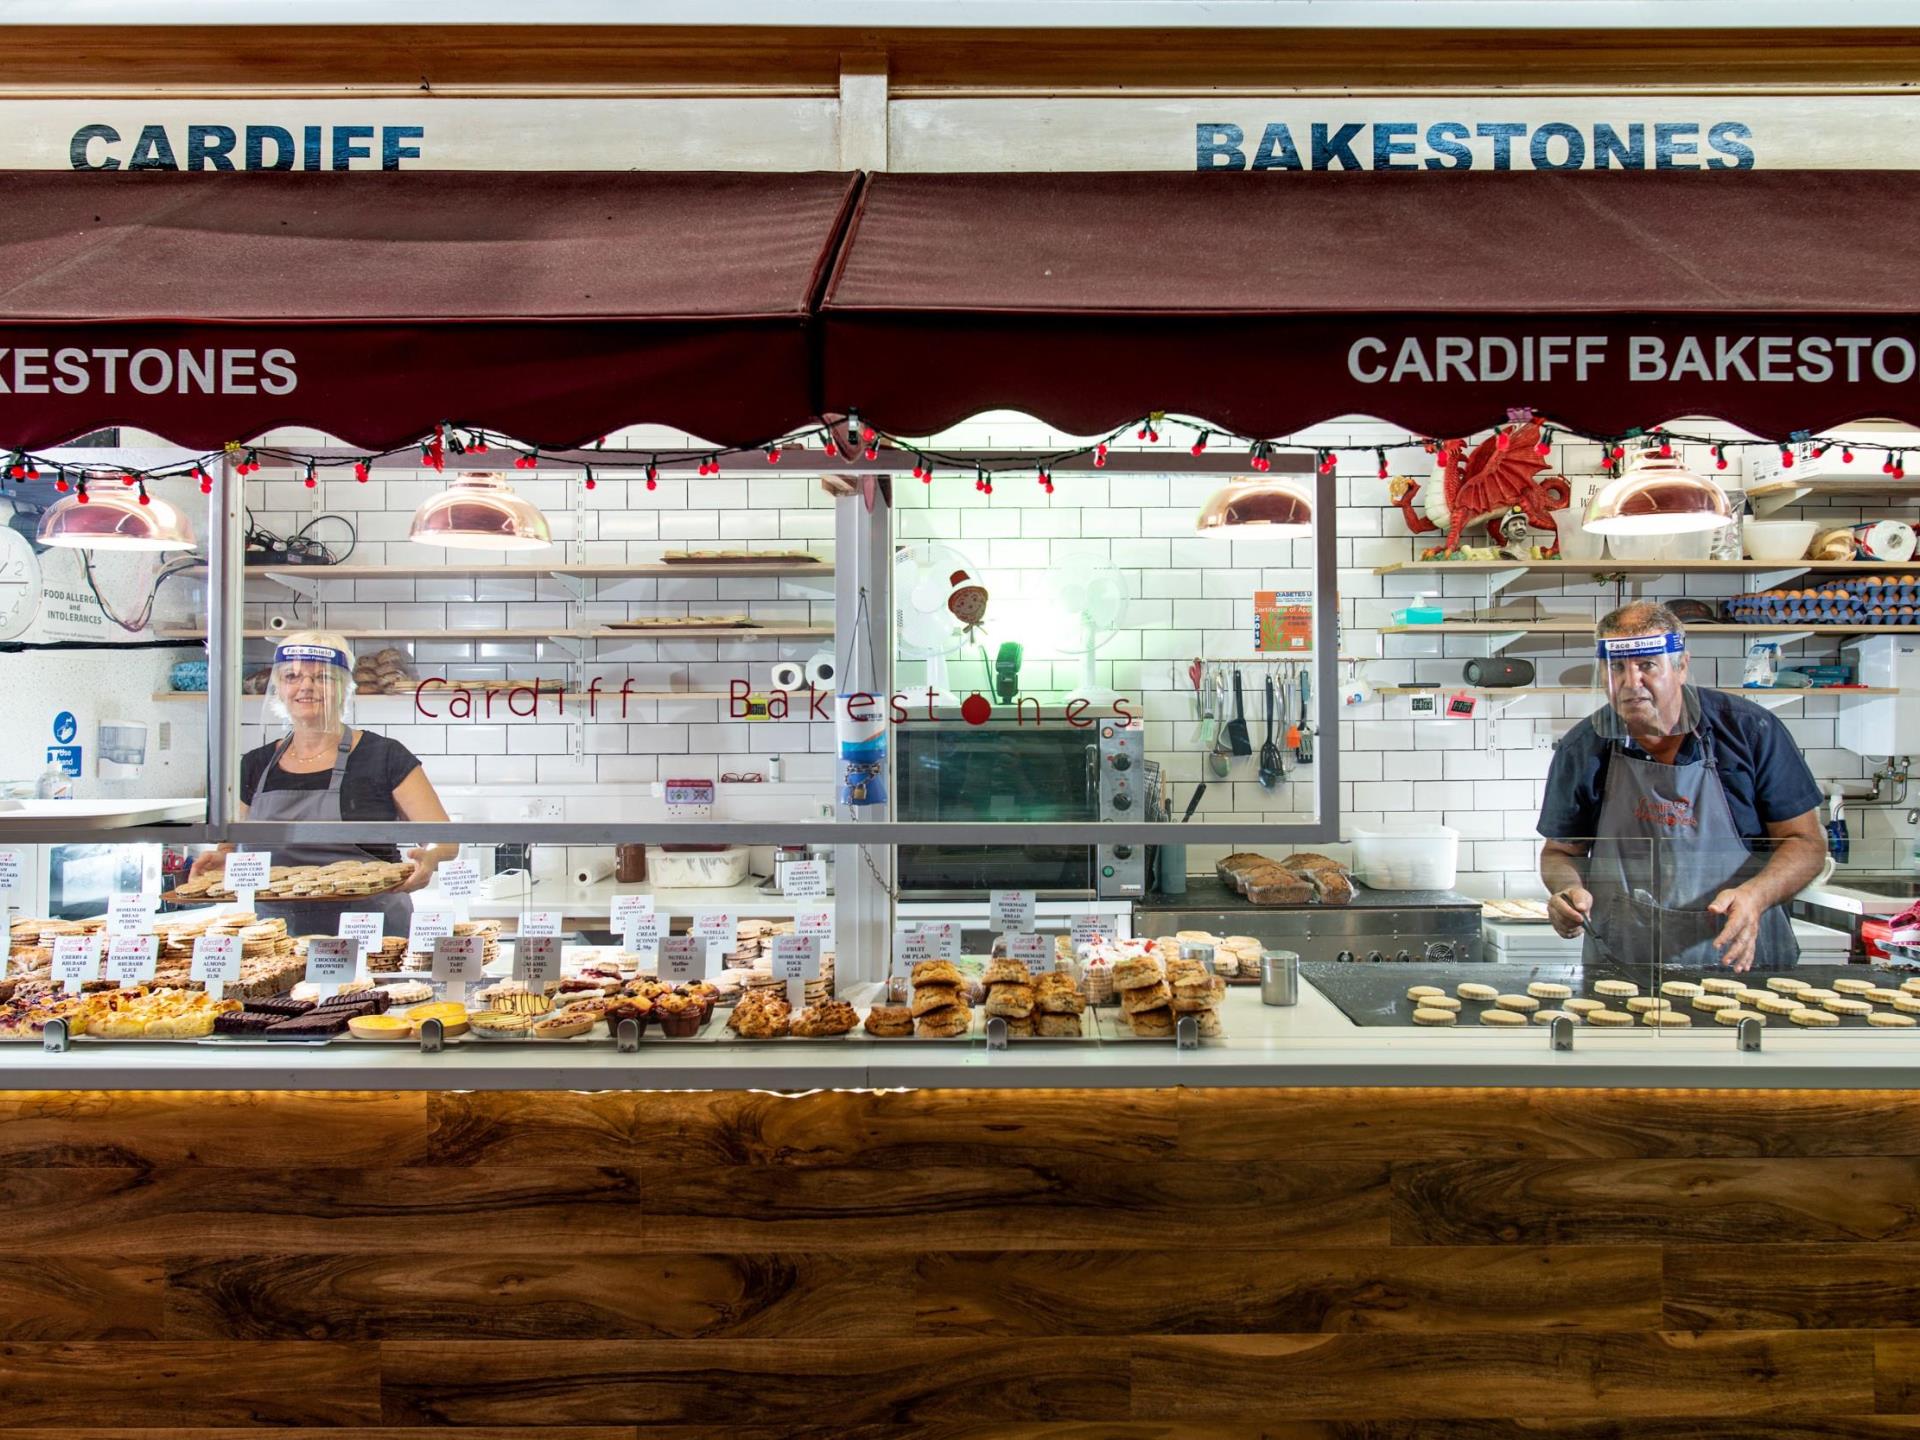 Cardiff Market - Cardiff Bakestones